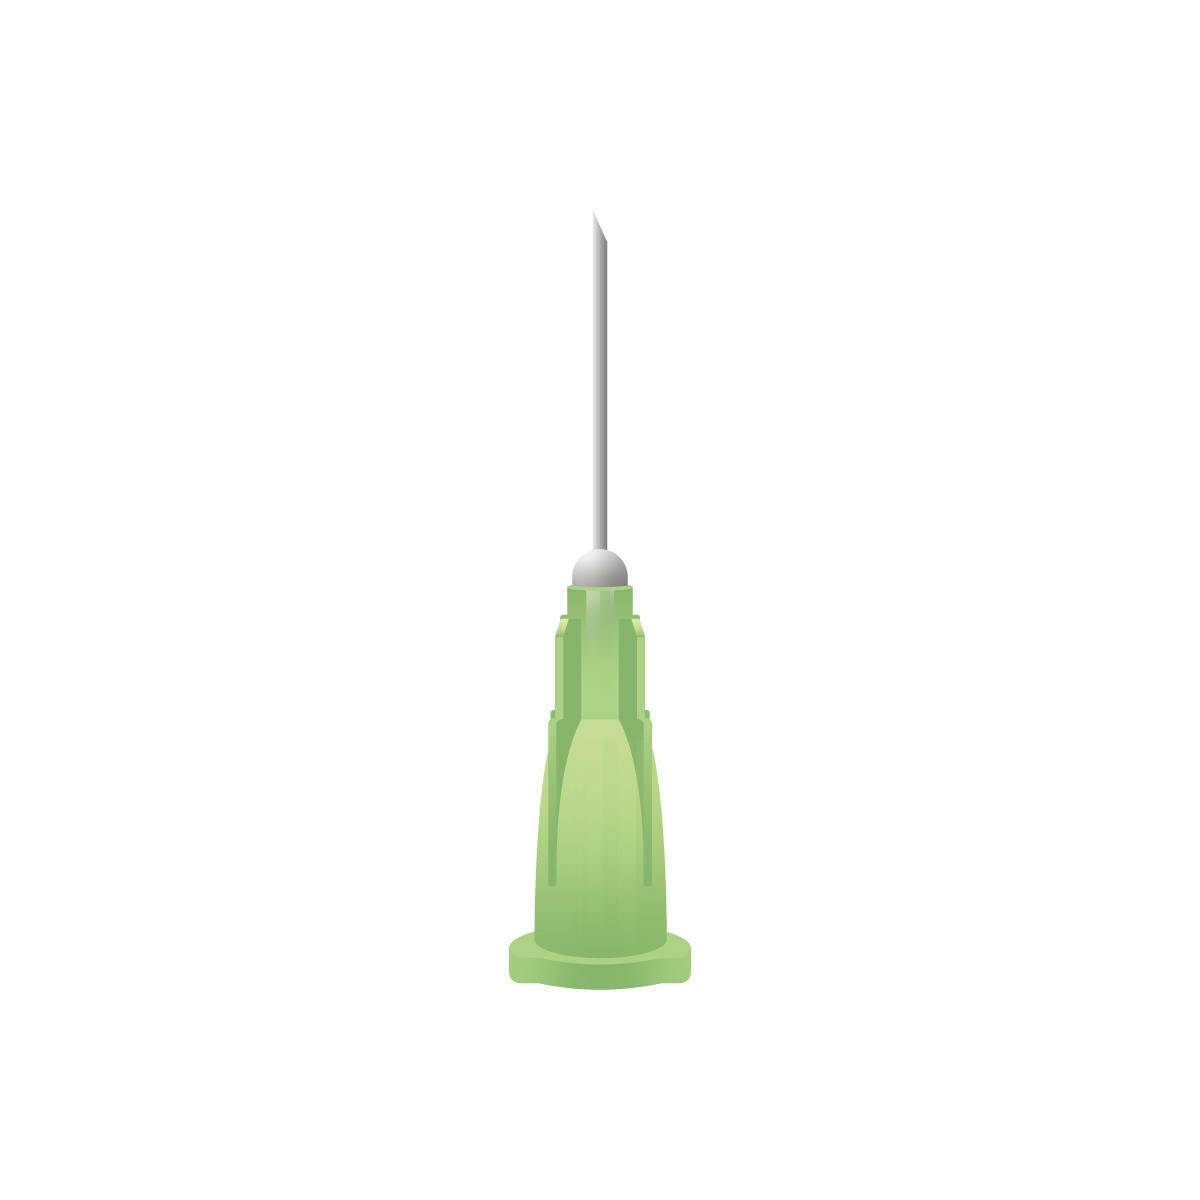 21g Green 5/8 inch BD Microlance Needles